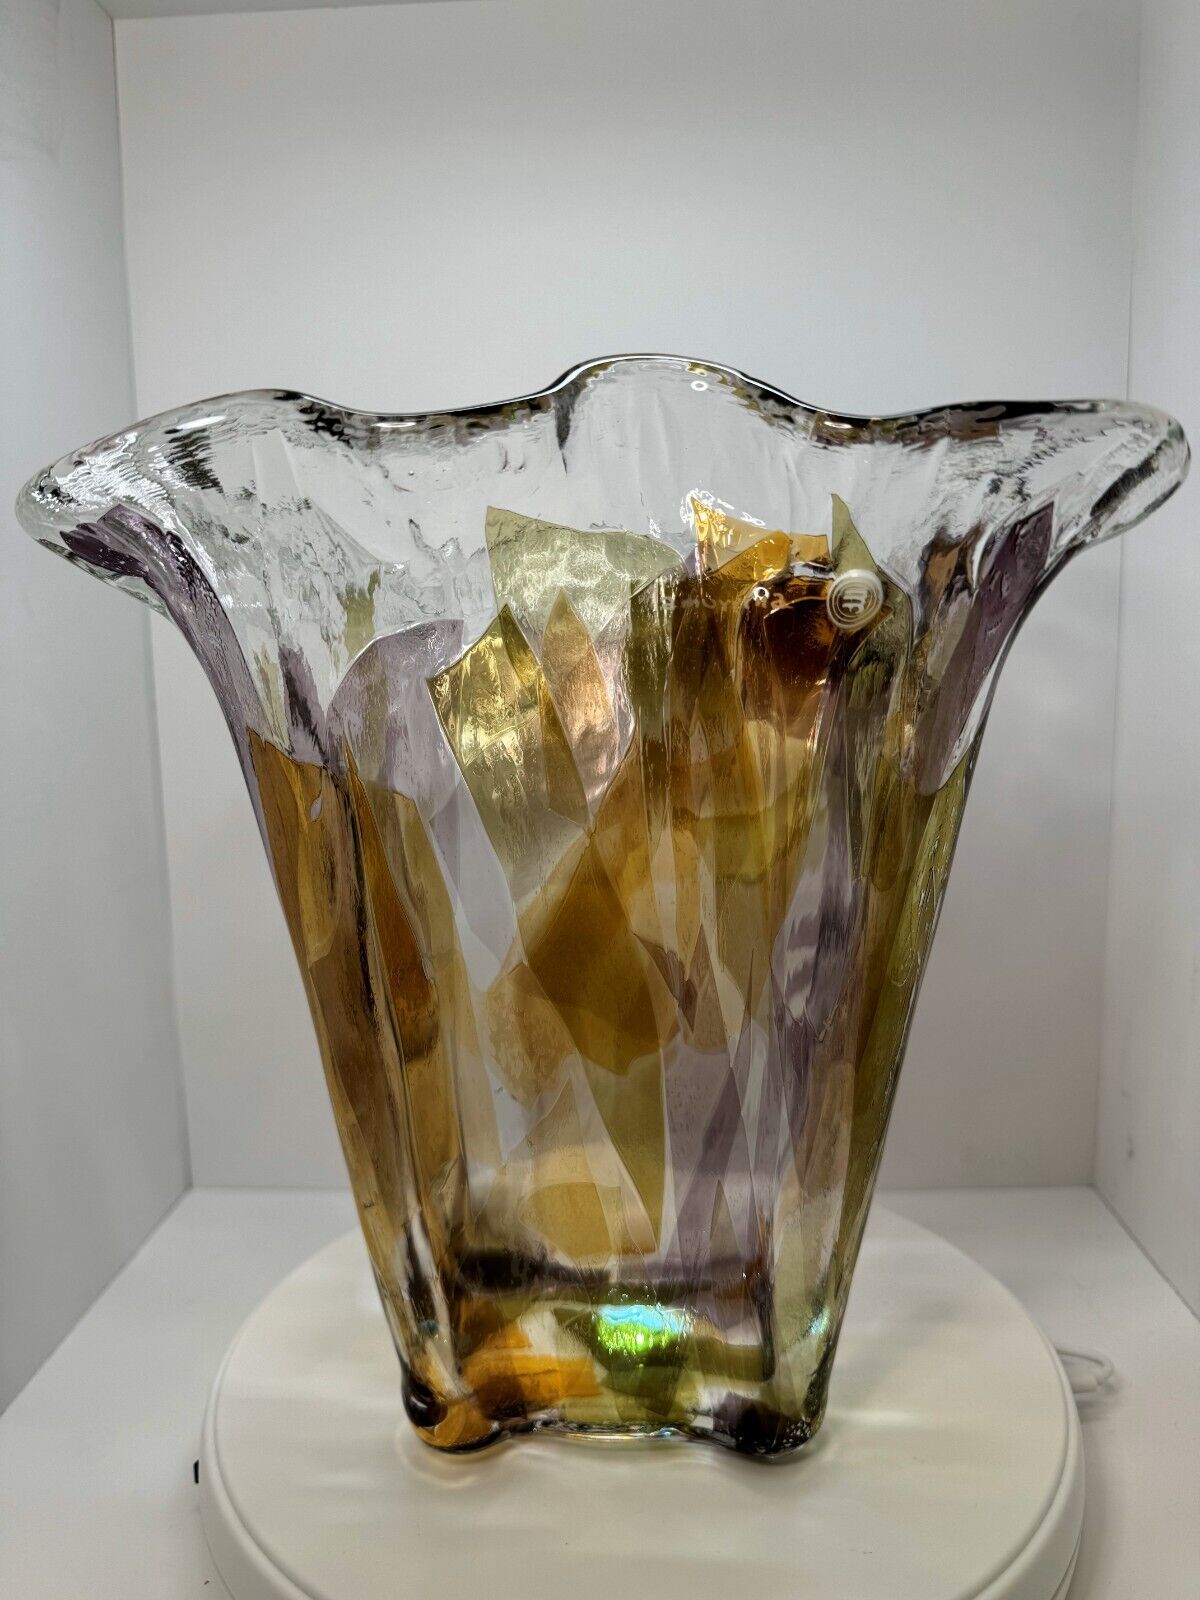 La Murrina Murano Glass Vase (Original) - Vintage - See notes in description